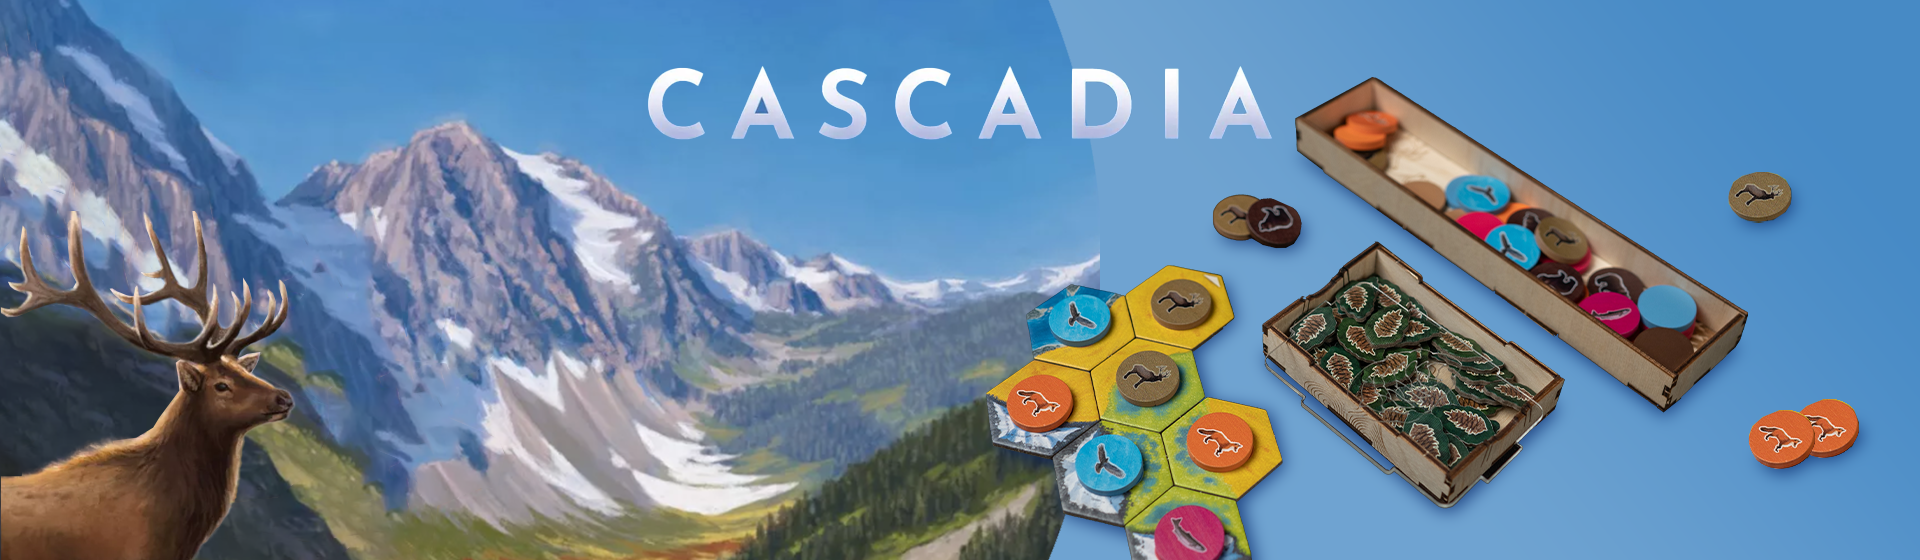 Cascadia Organizer